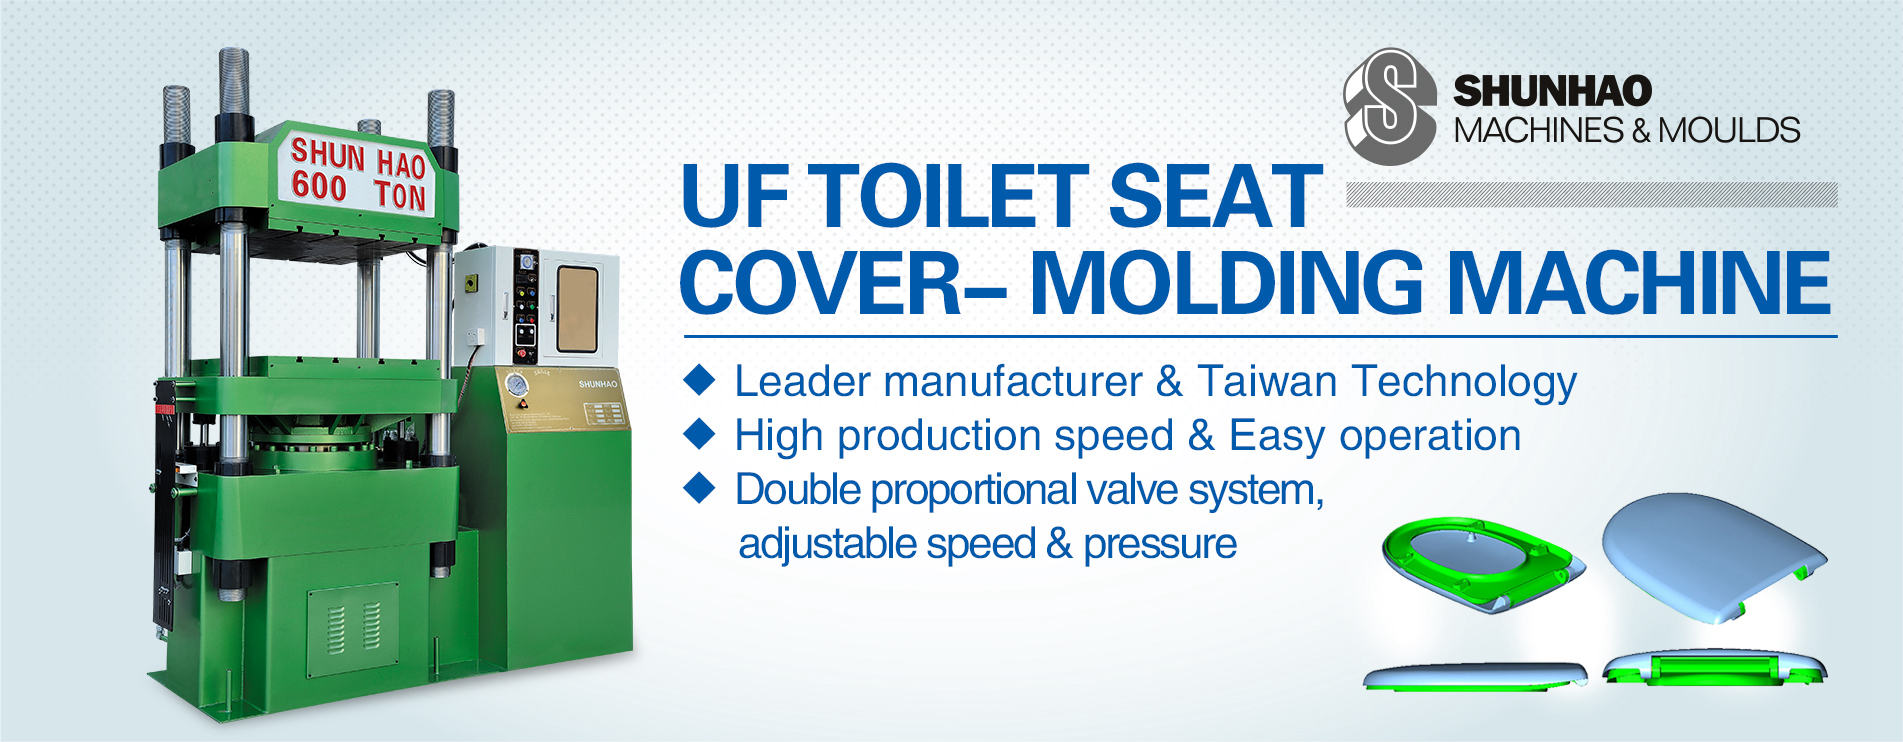 UF Toilet Seat Cover Molding Machine